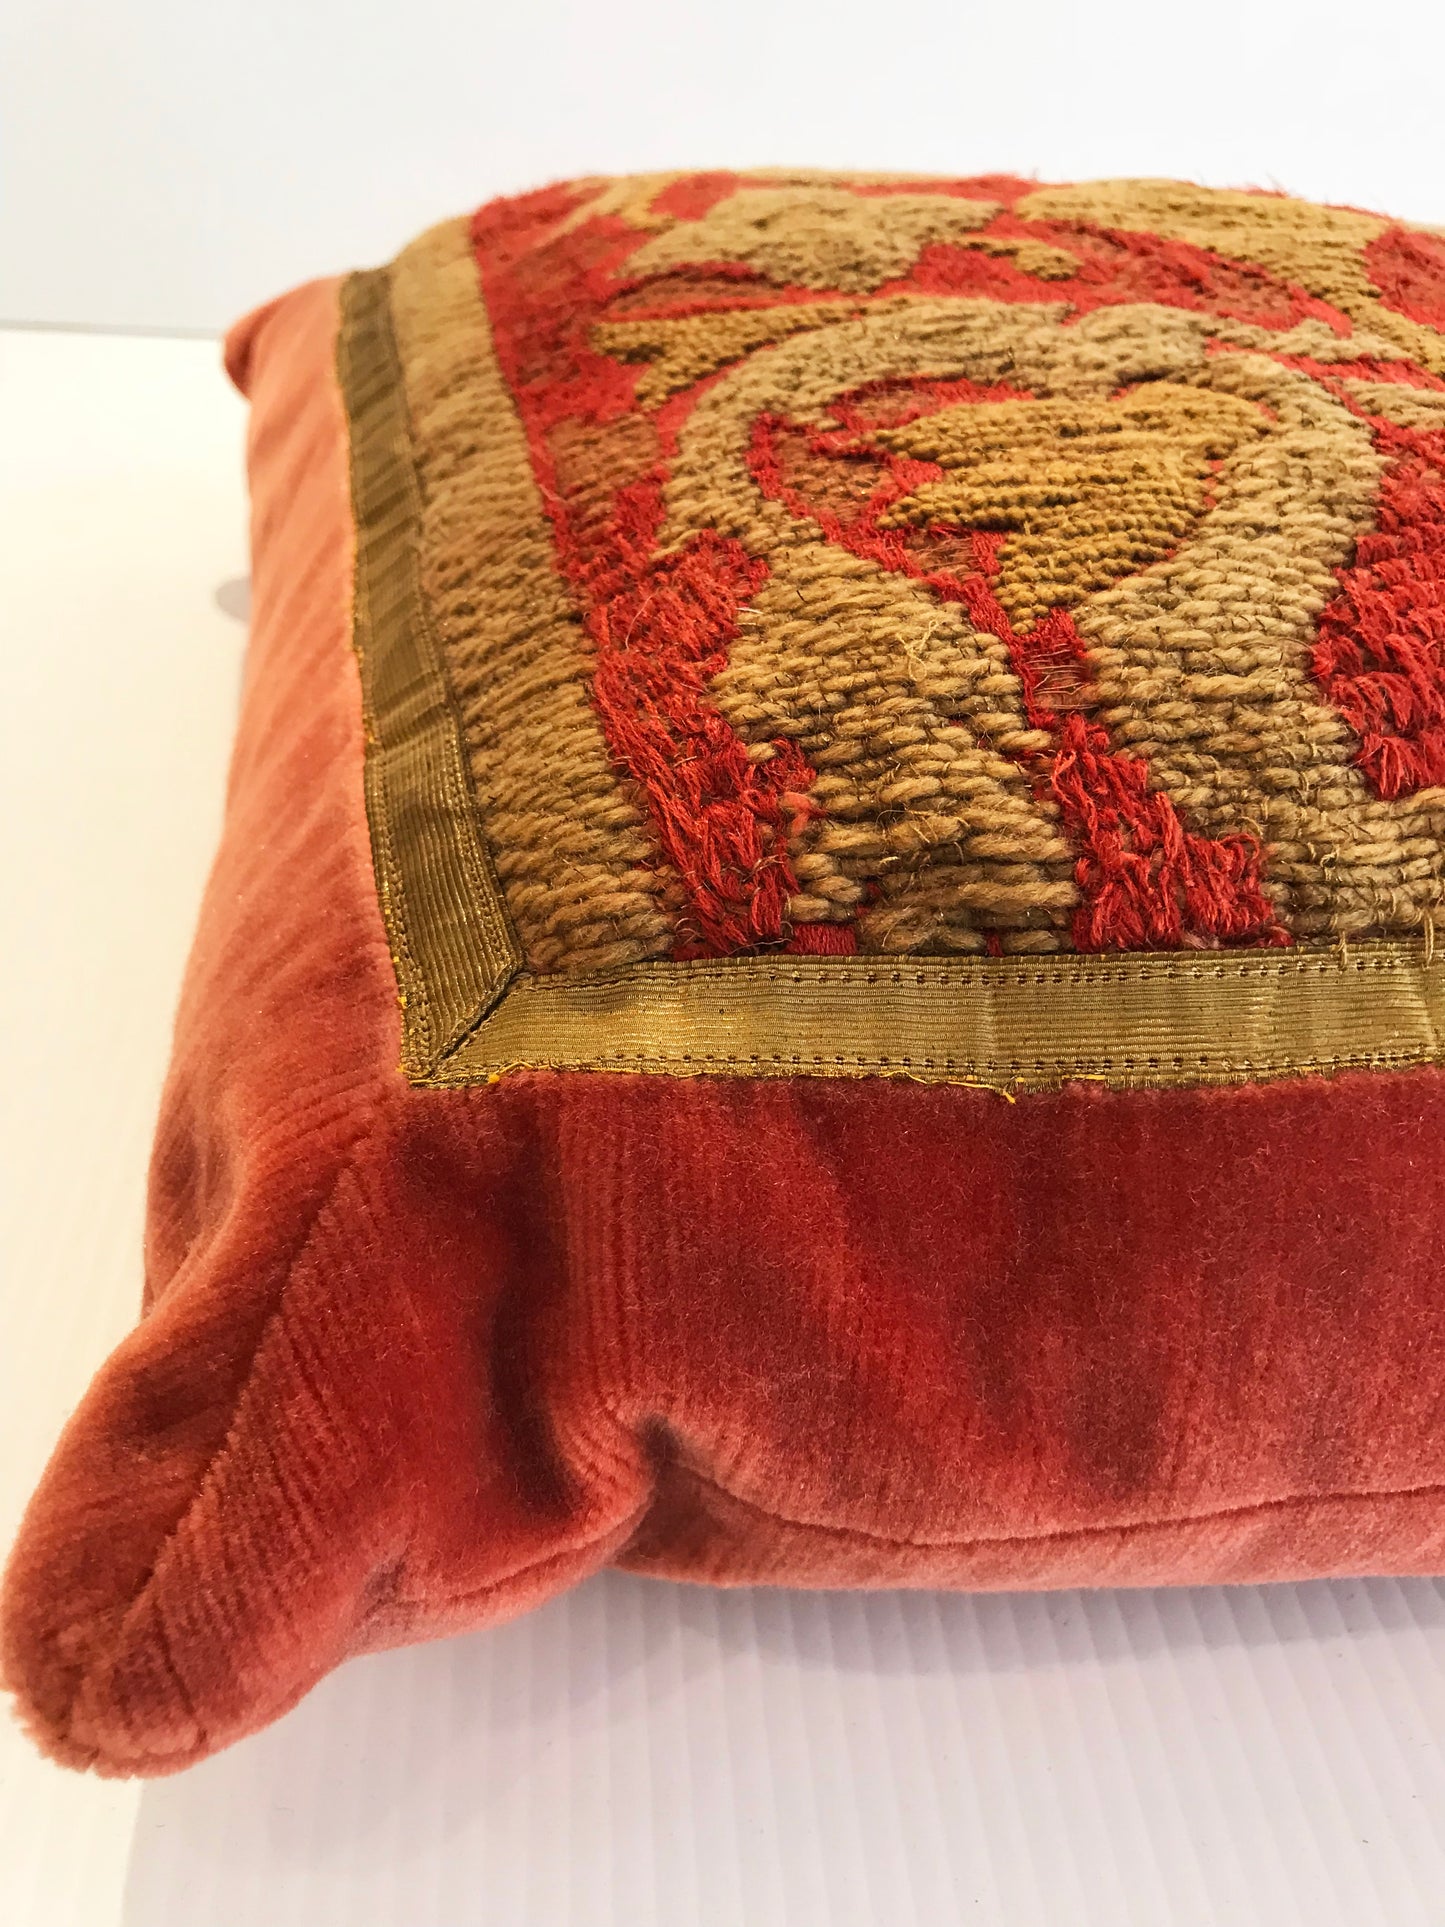 18th Century Italian Embroidery Pillow